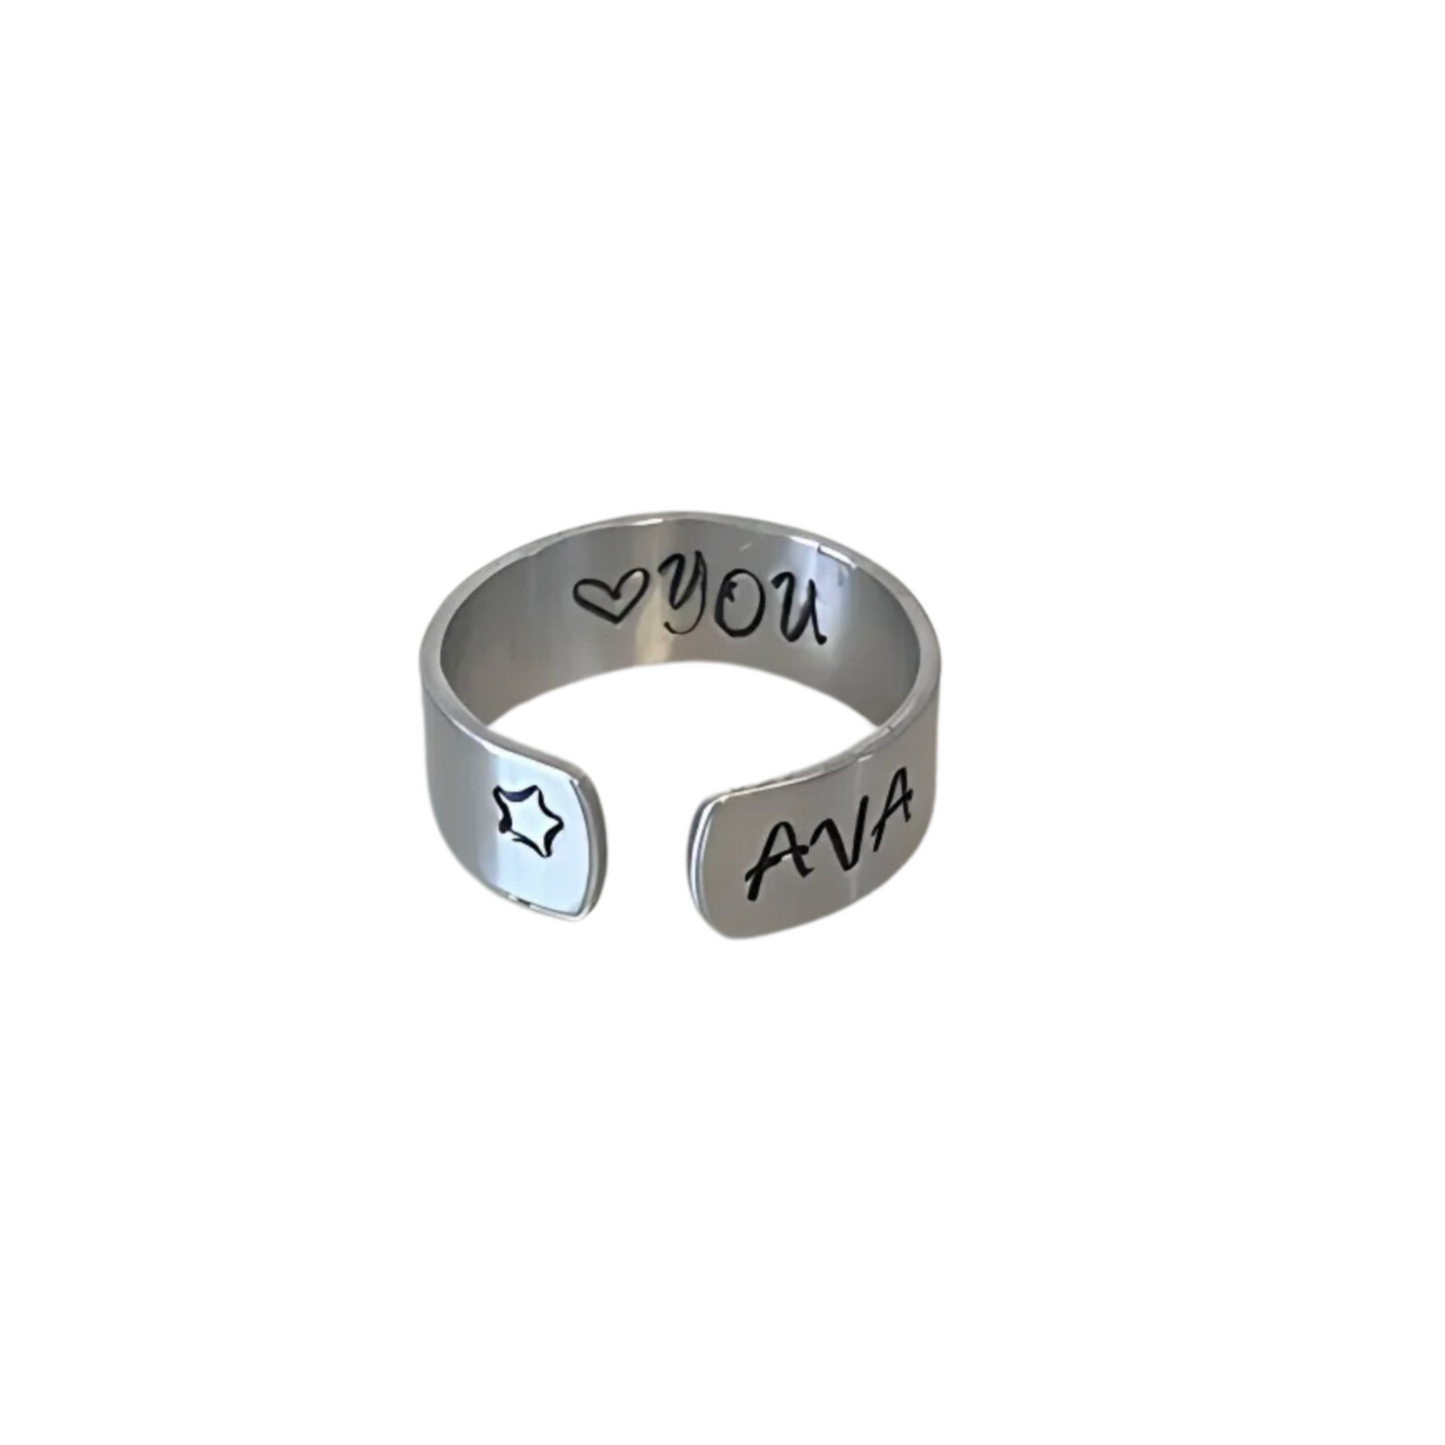 Personalised Stamped Ring